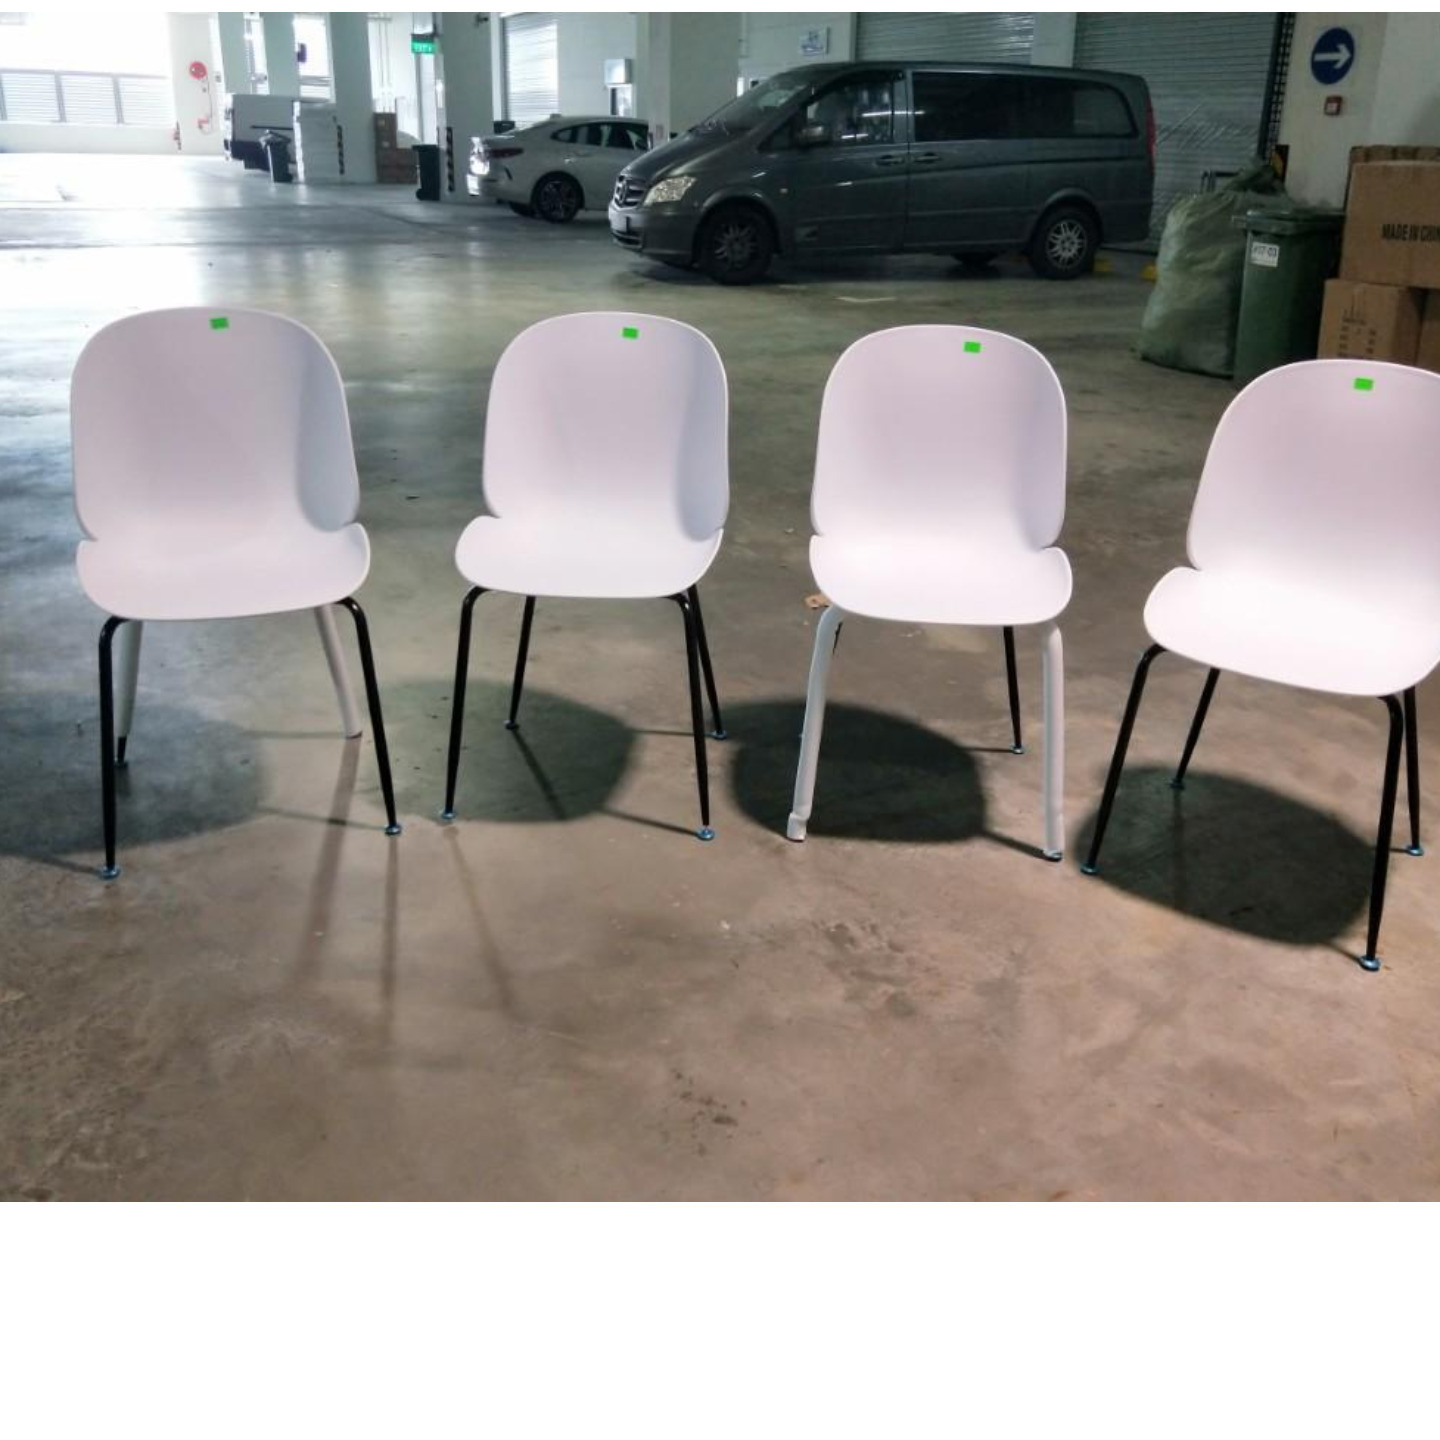 IZZY Designer Replica Chairs in WHITE